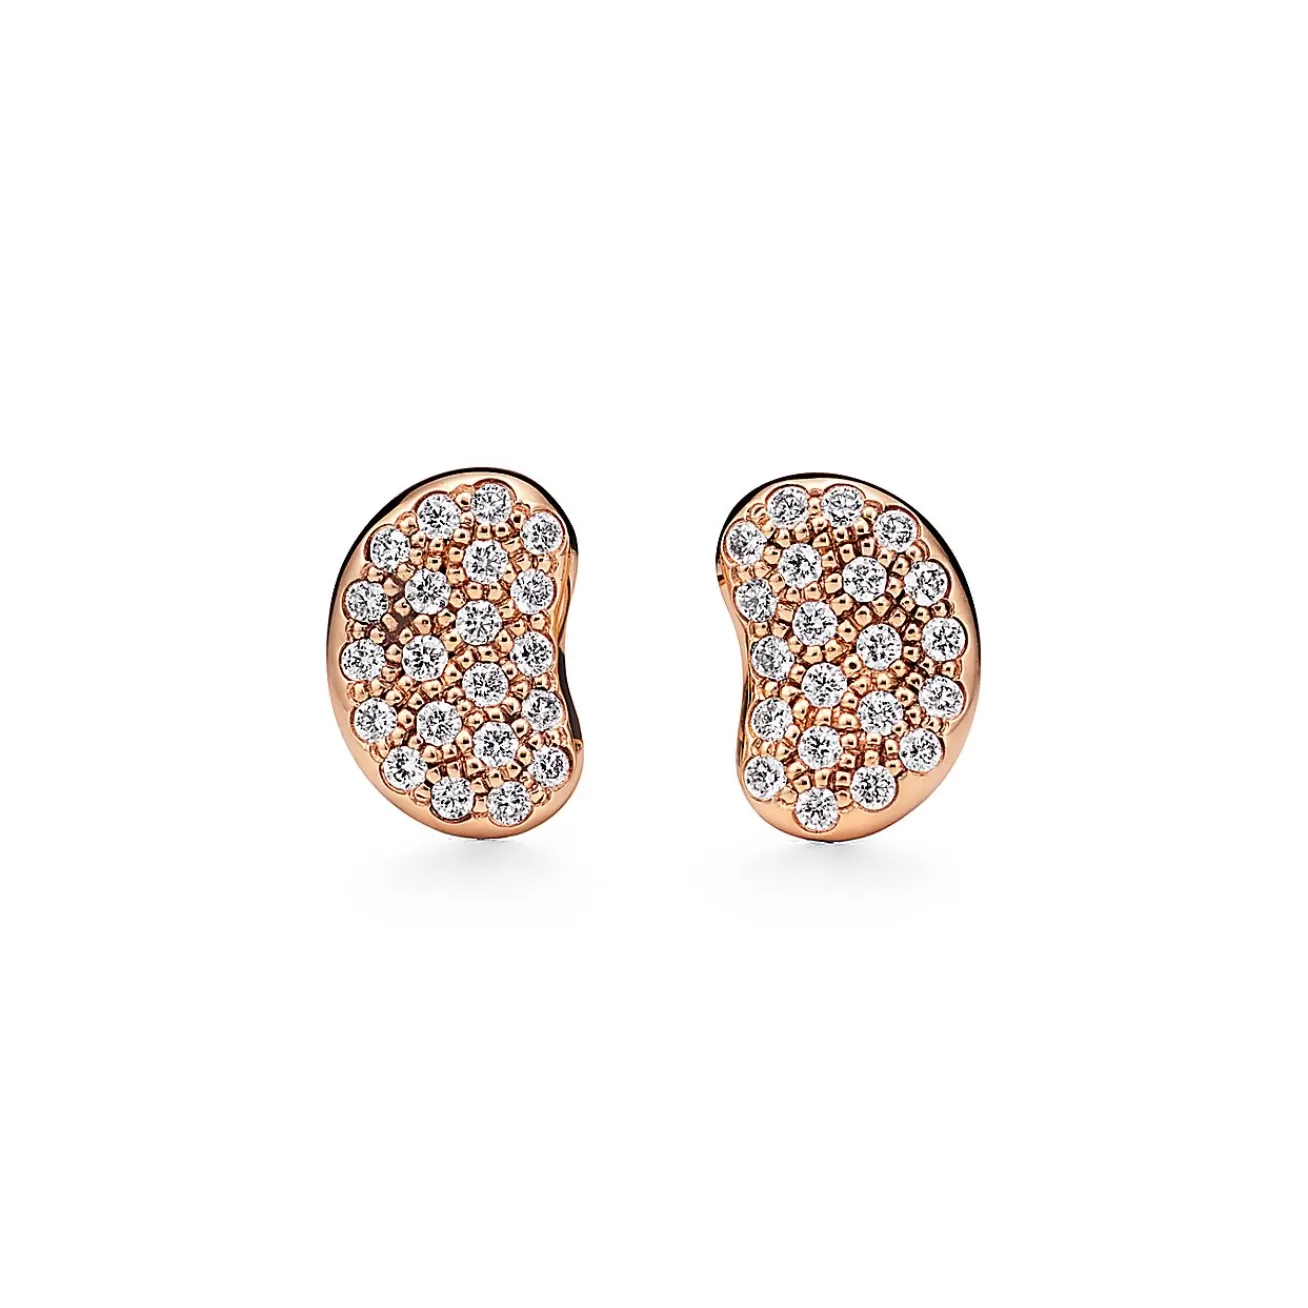 Tiffany & Co. Elsa Peretti® Bean® design Earrings in Rose Gold with Diamonds, 9 mm | ^ Earrings | Rose Gold Jewelry